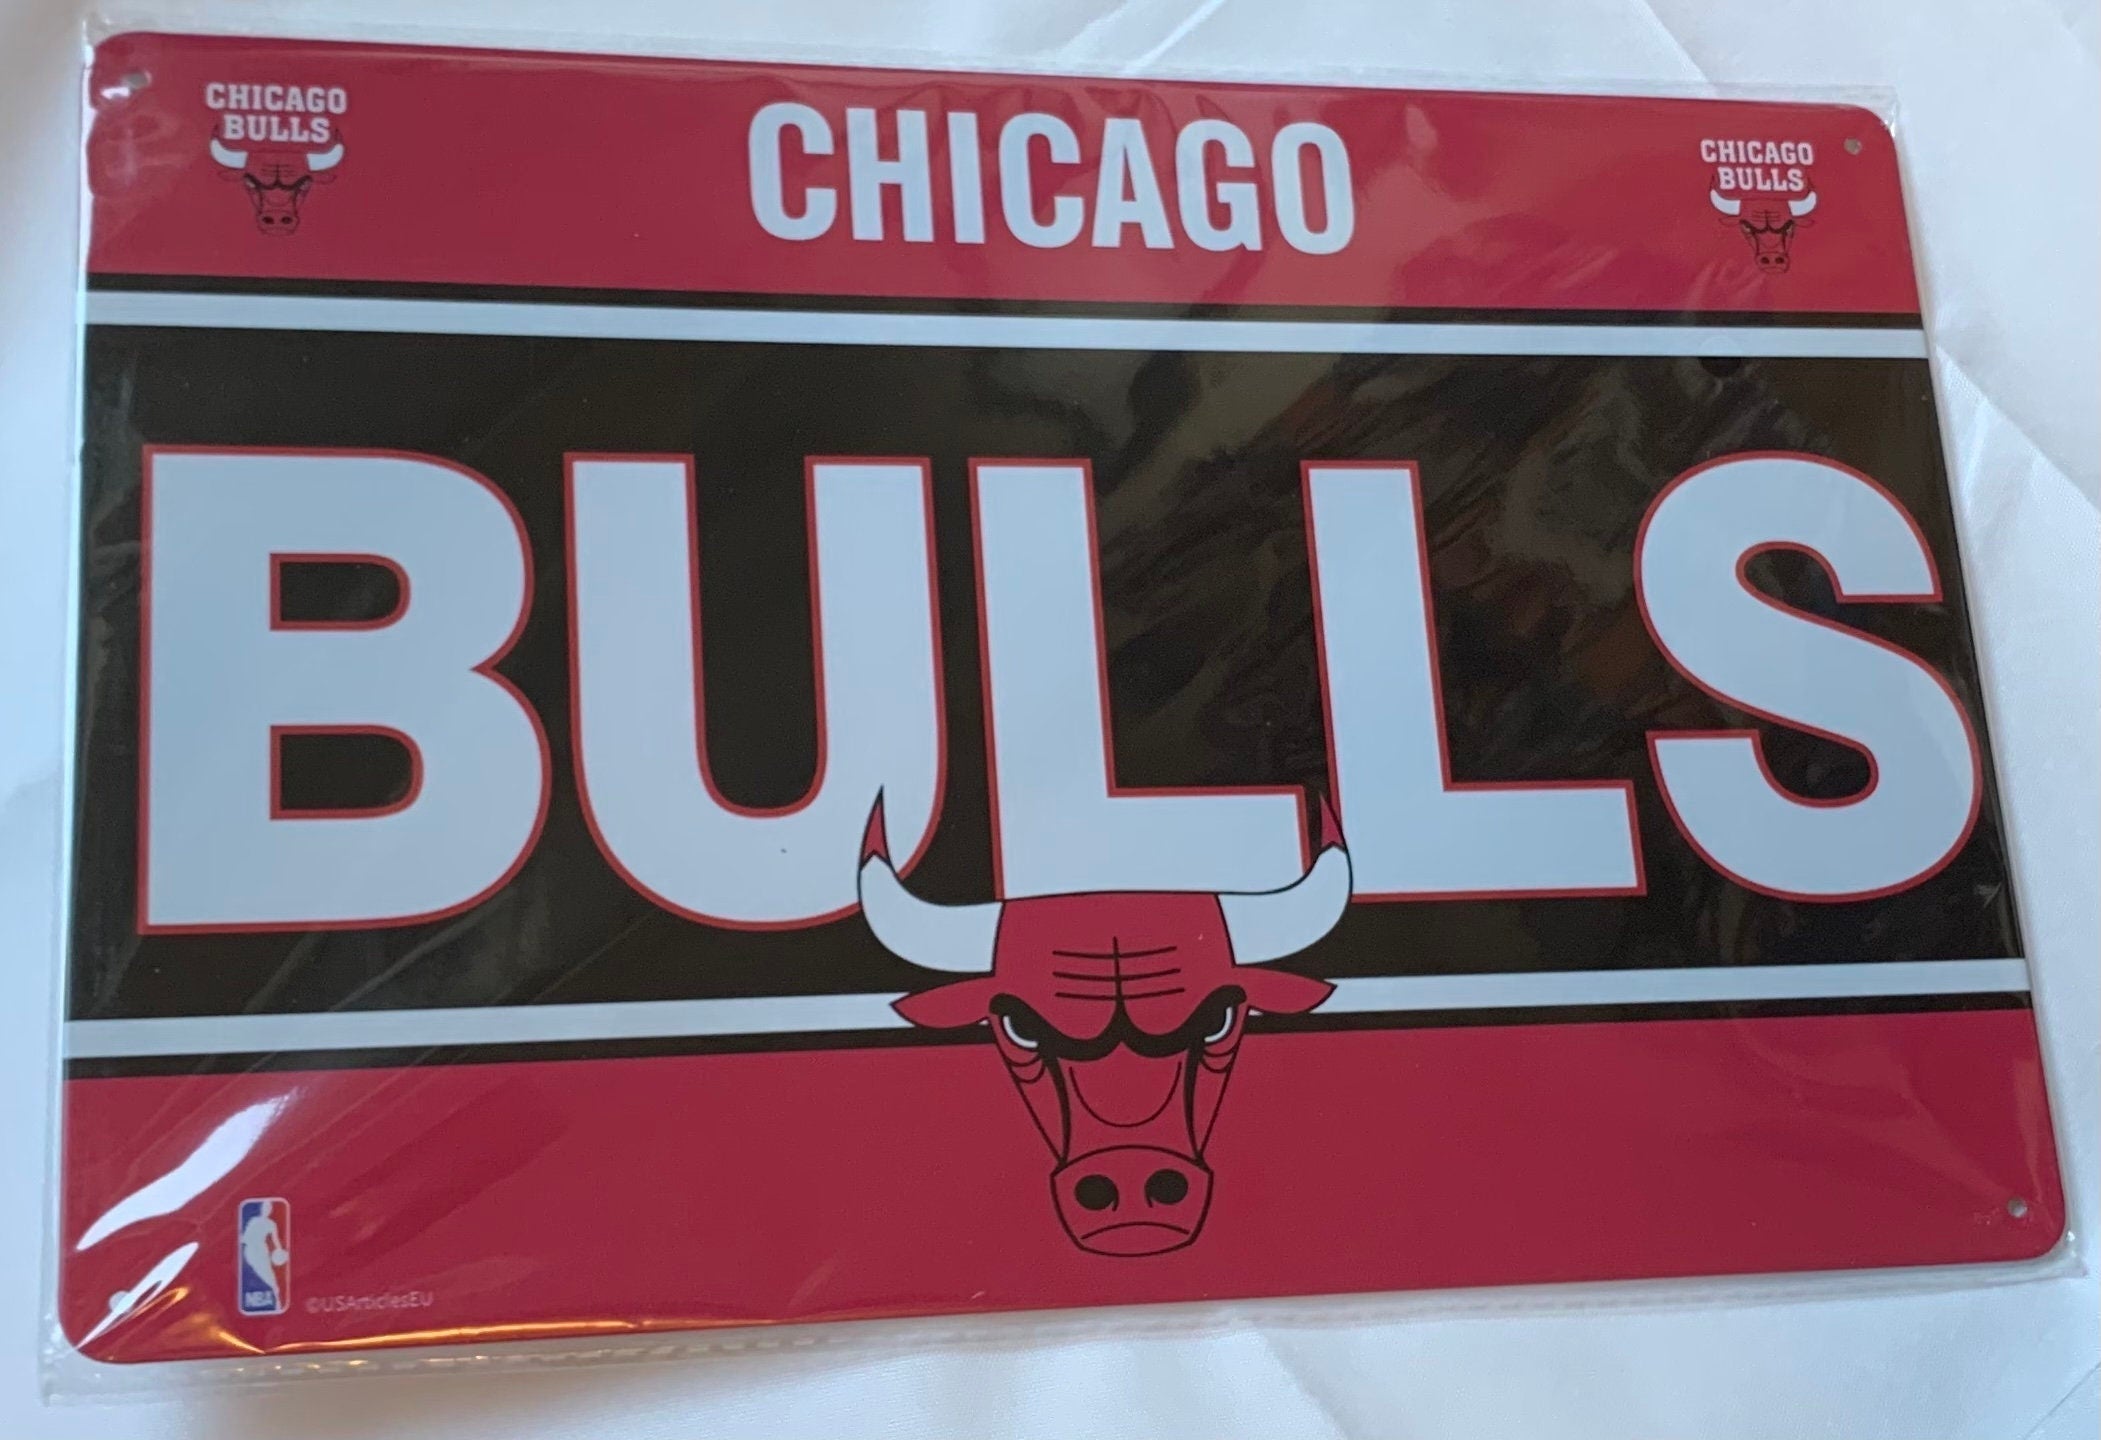 Chicago Bullls NBA basketball USA metal plate license plate Vintage gift sports displays ball michael jordan 23 - Bullsred3